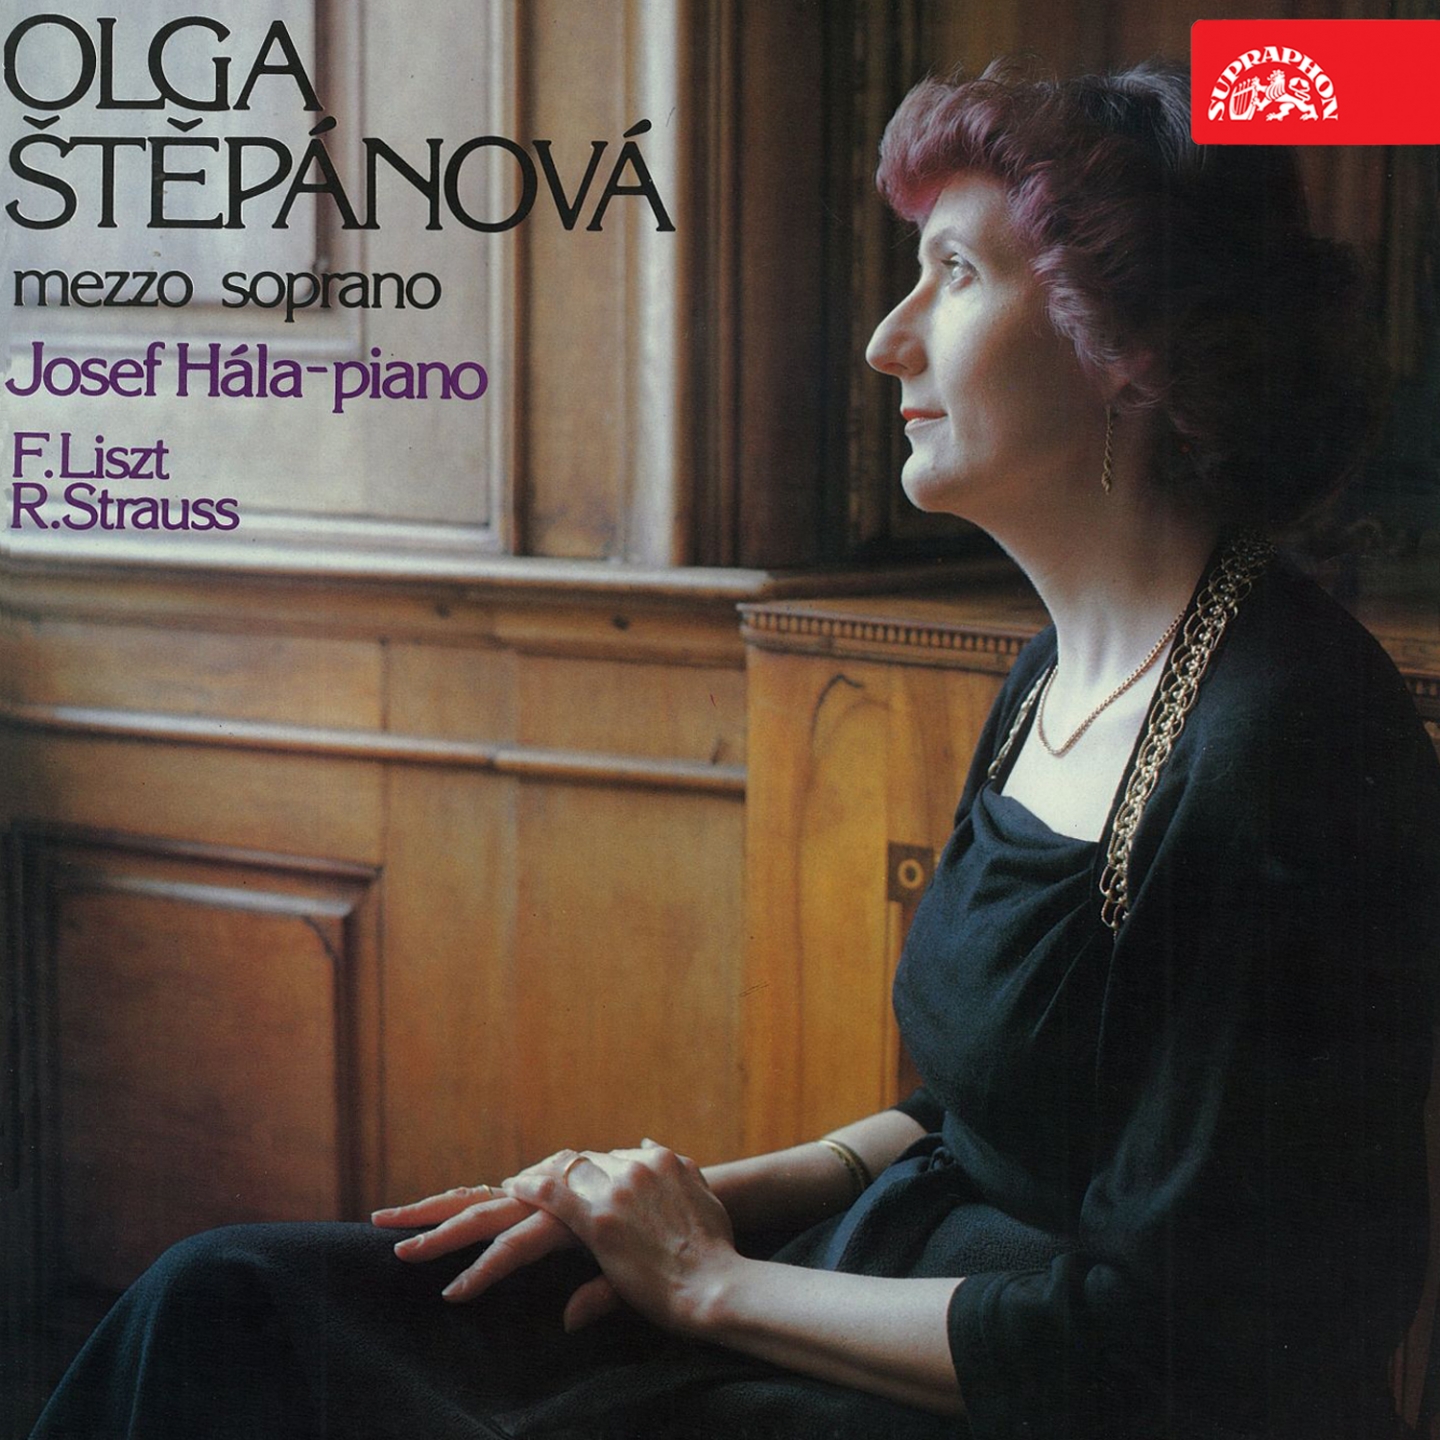 Olga te pa nova: Liszt and Strauss